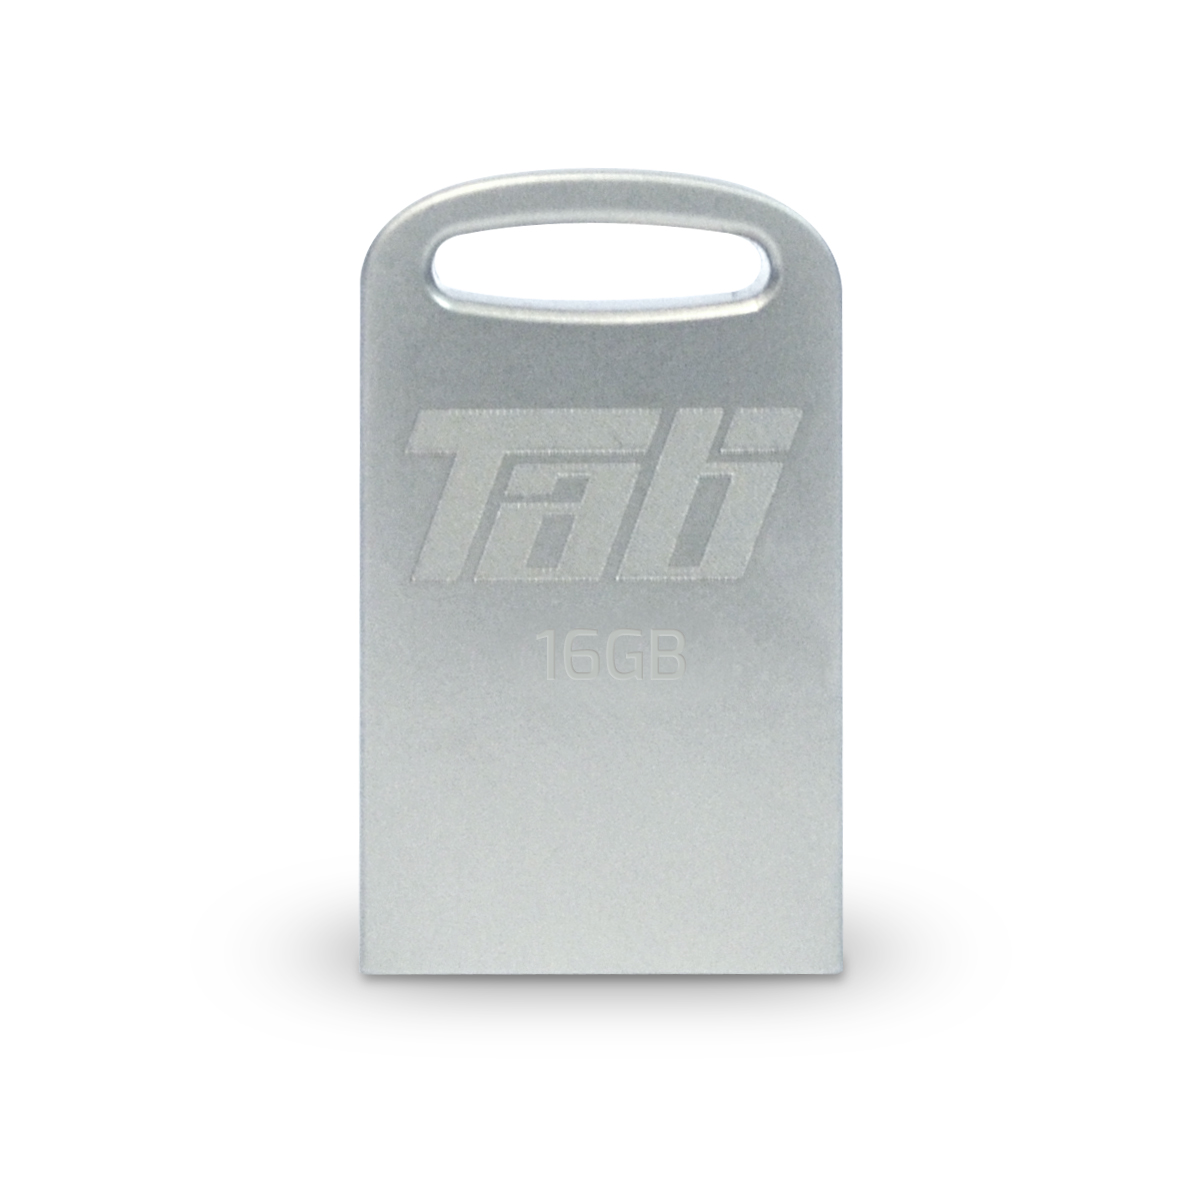 Flash disk Patriot Tab 16GB USB 3.0